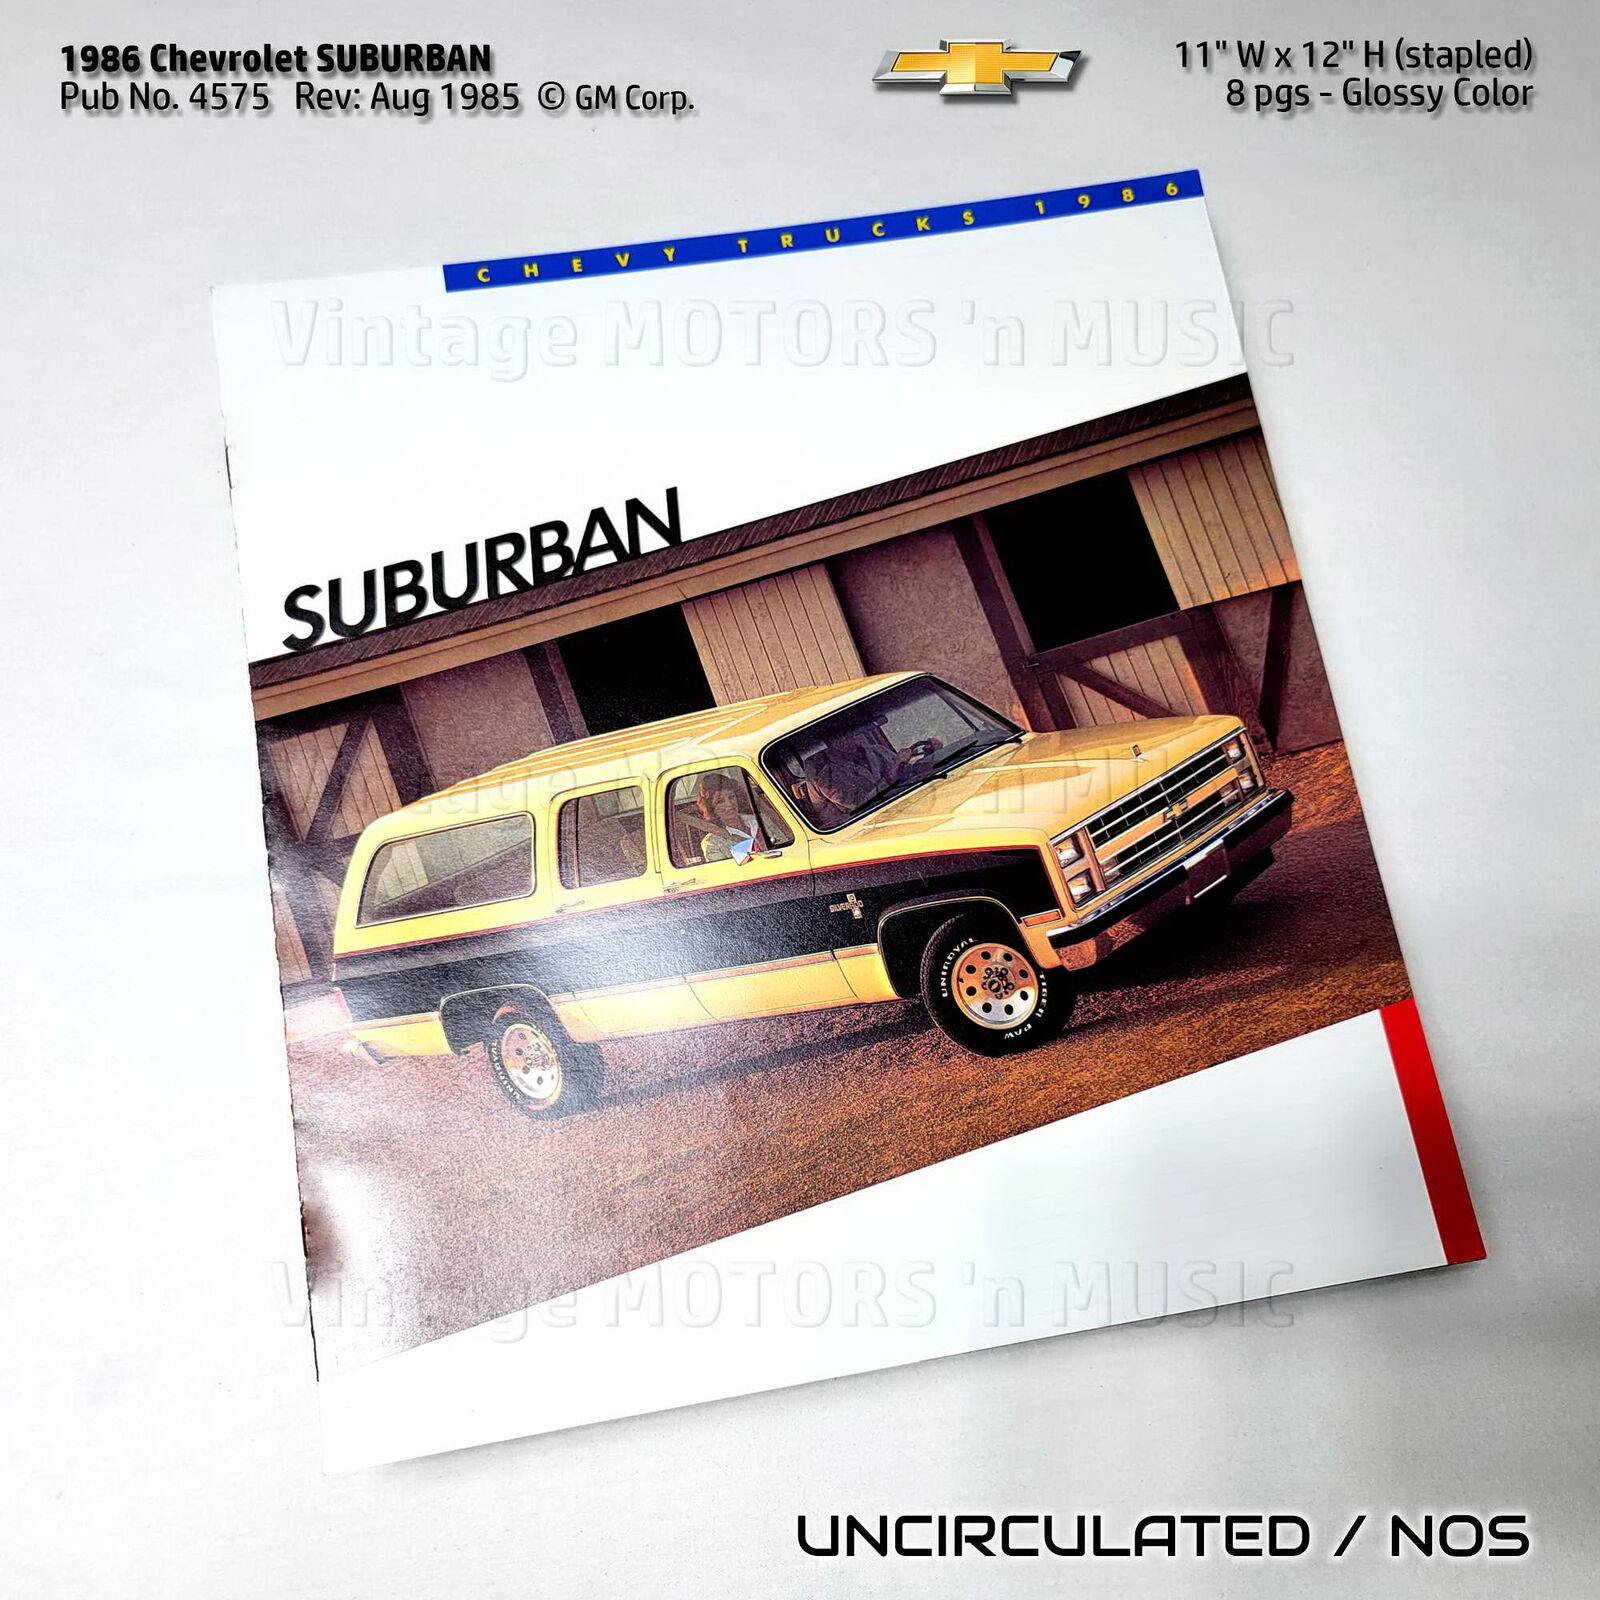 UNCIRCULATED 1986 Chevy Trucks Chevrolet Suburban 8 Color Pgs Pub #4575 Rev 8-85